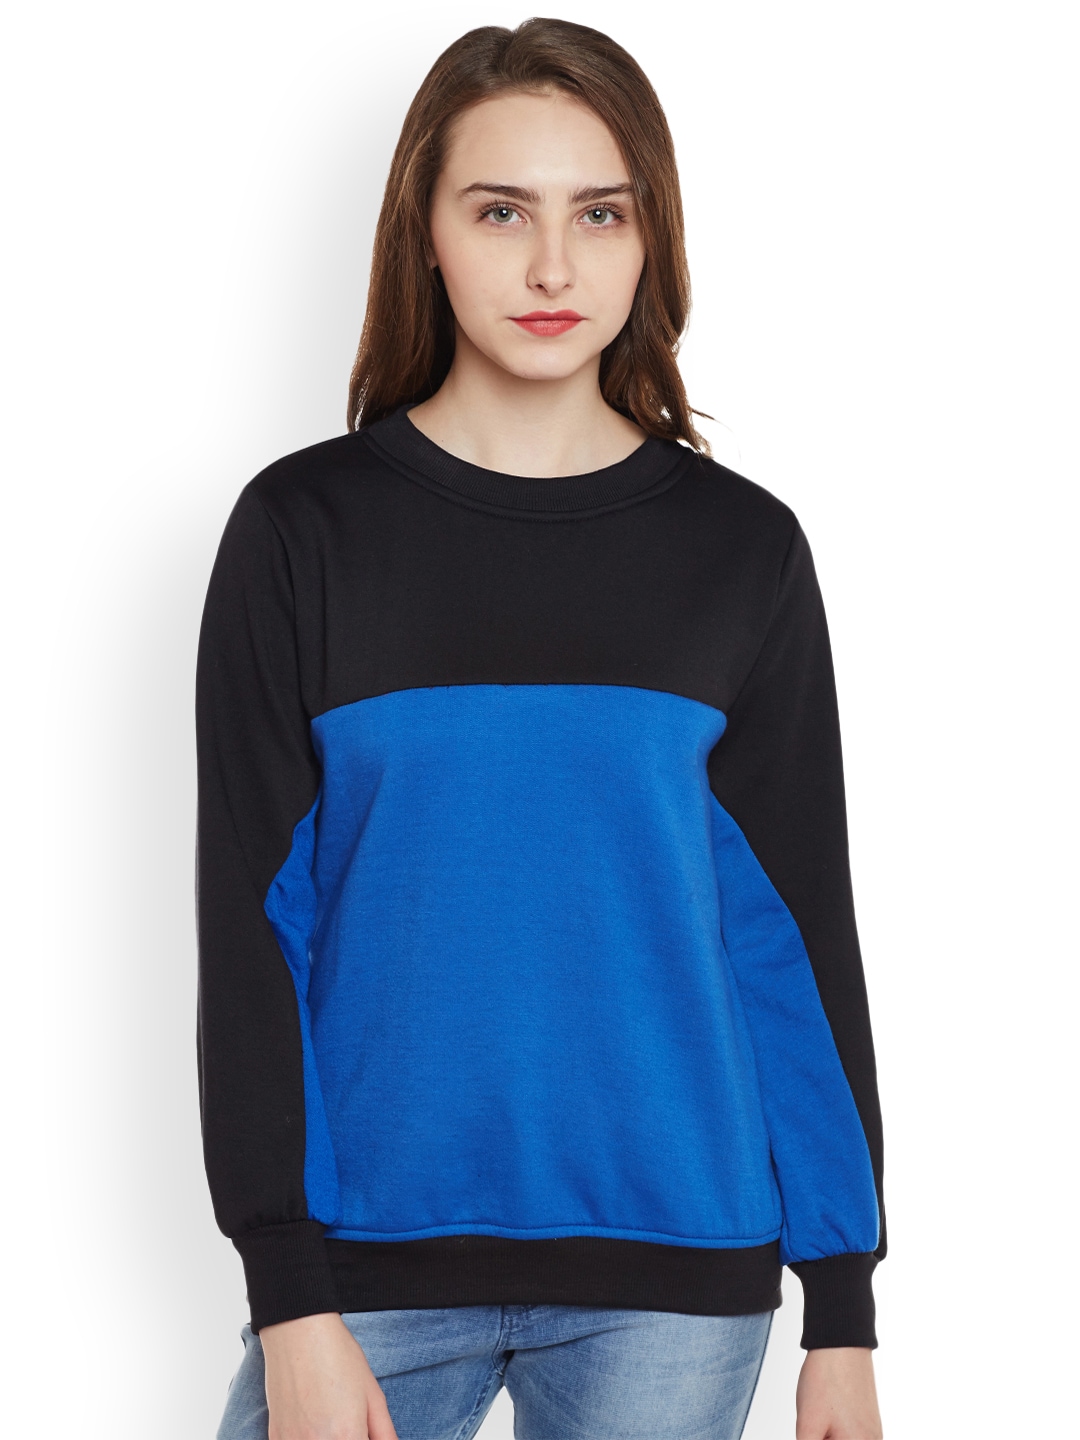 Belle Fille Women Black & Blue Colourblocked Sweatshirt Price in India